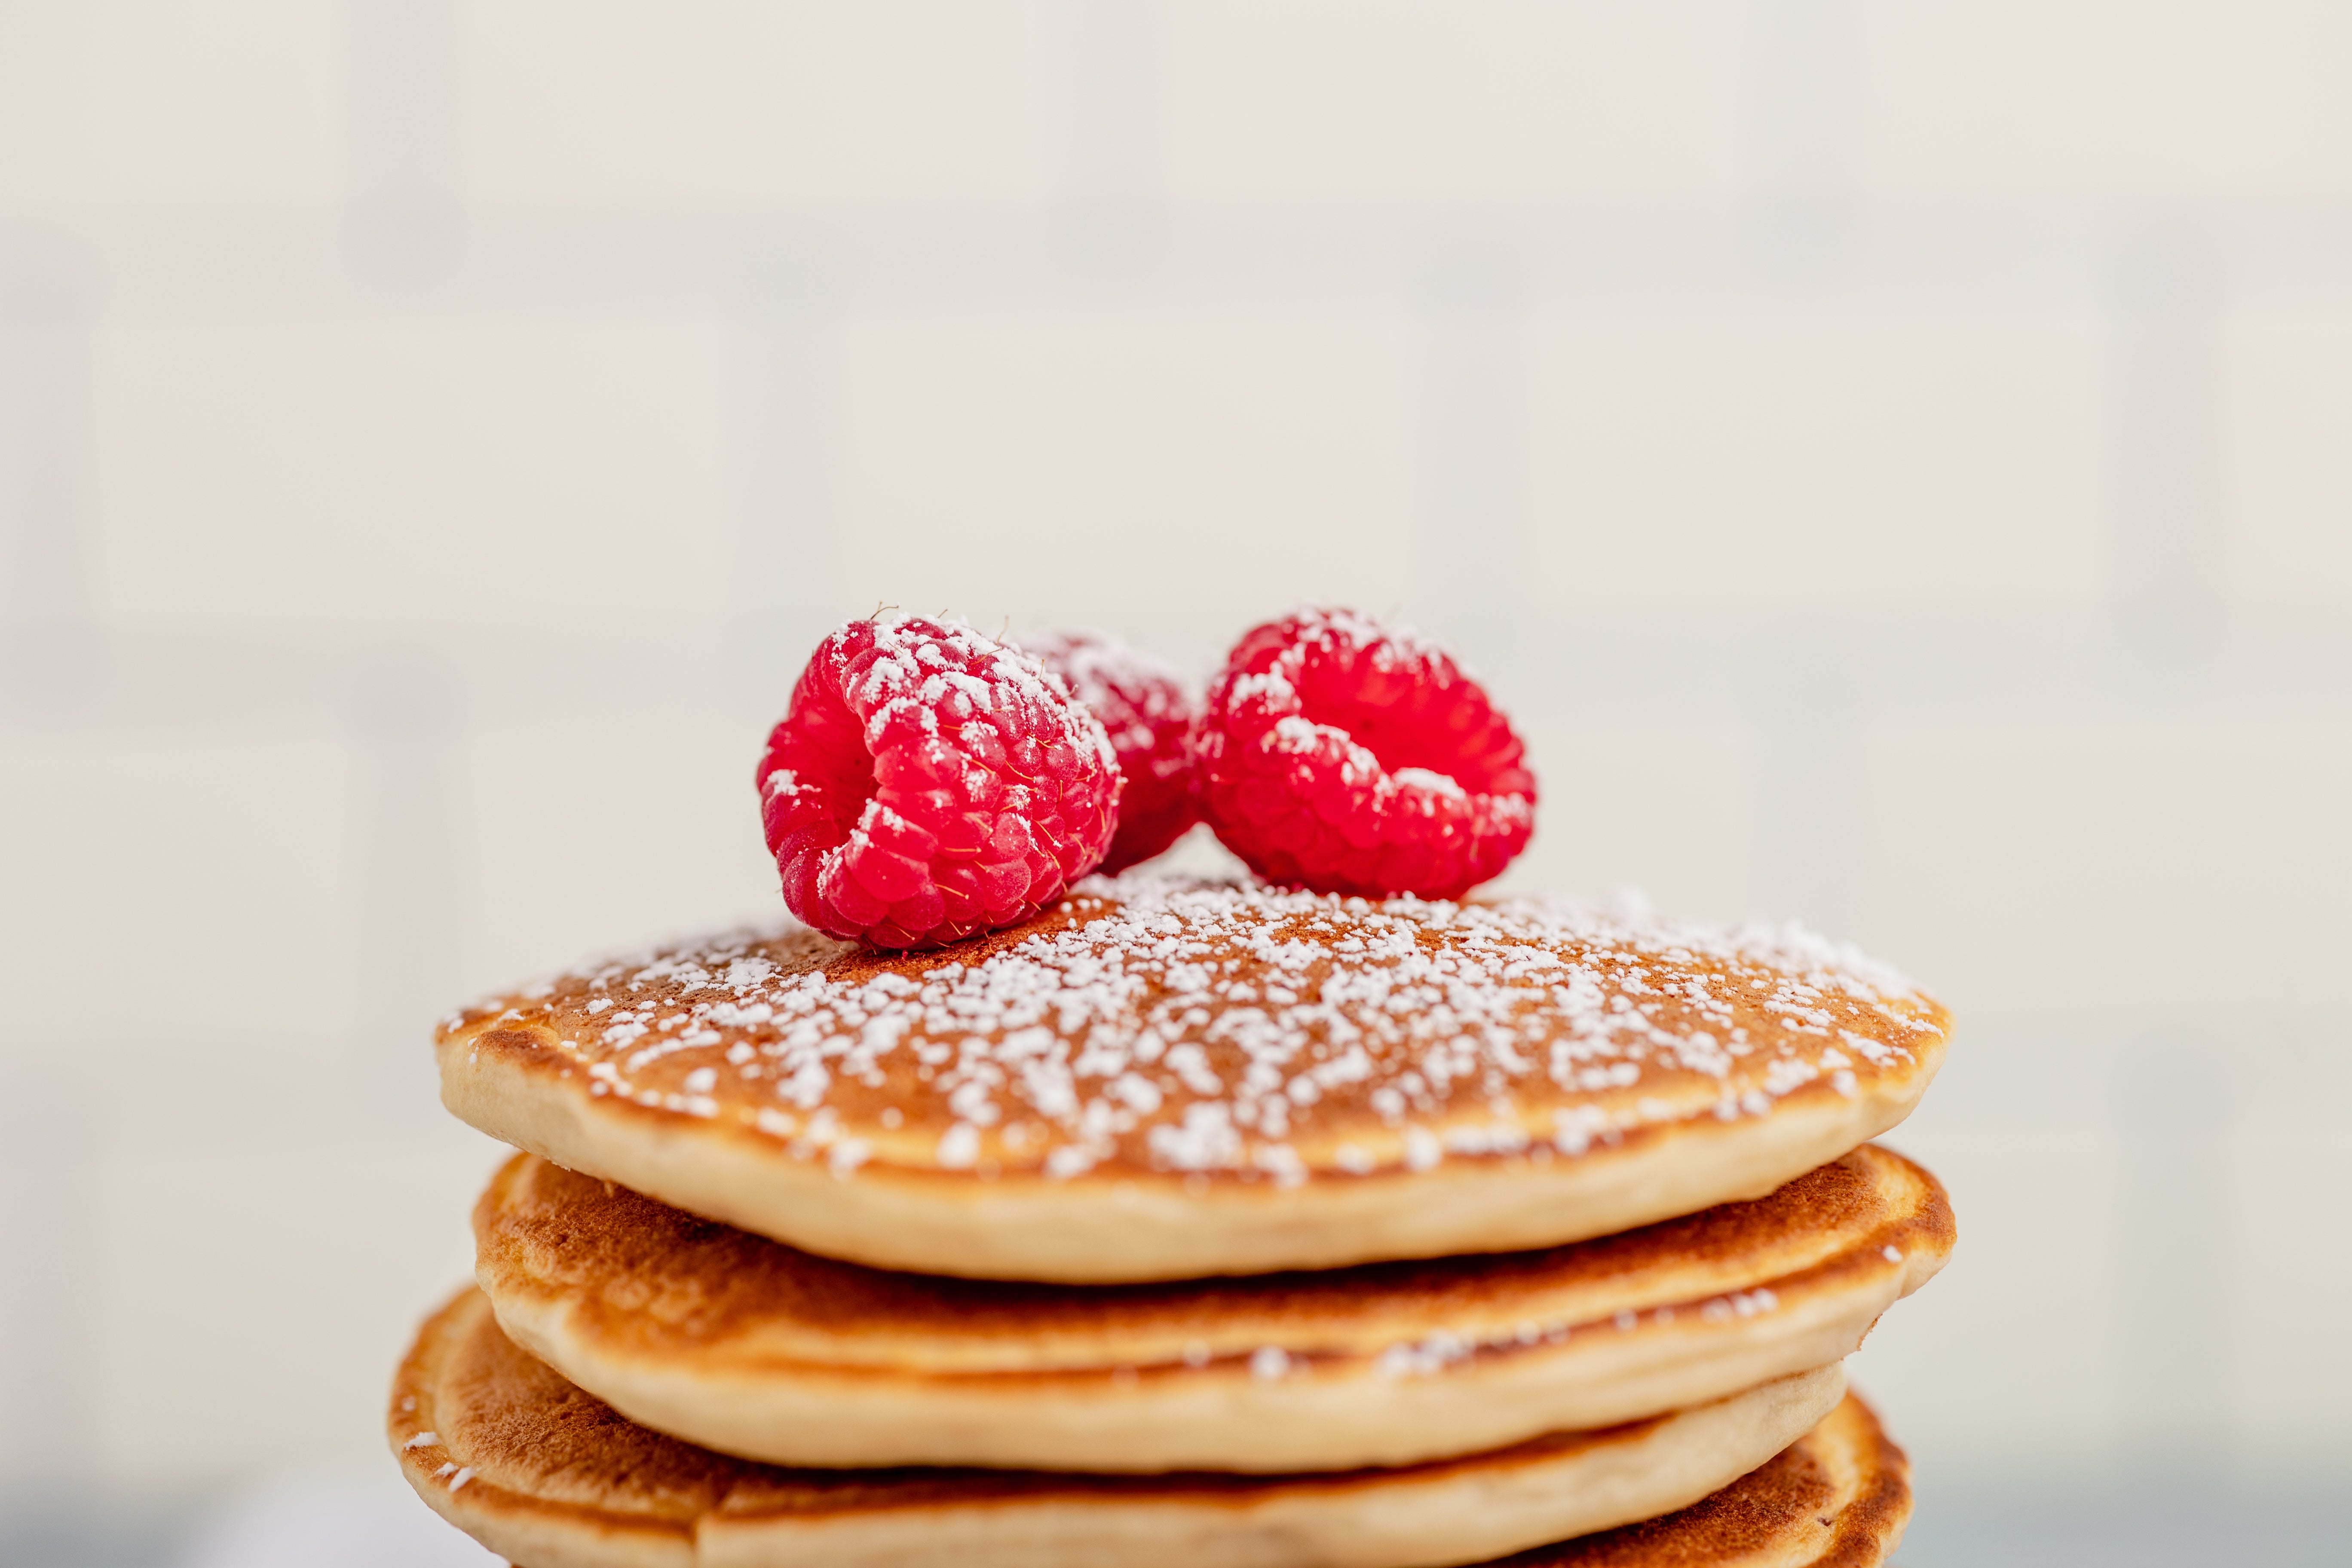 Get Creative with Raspberry Pancakes